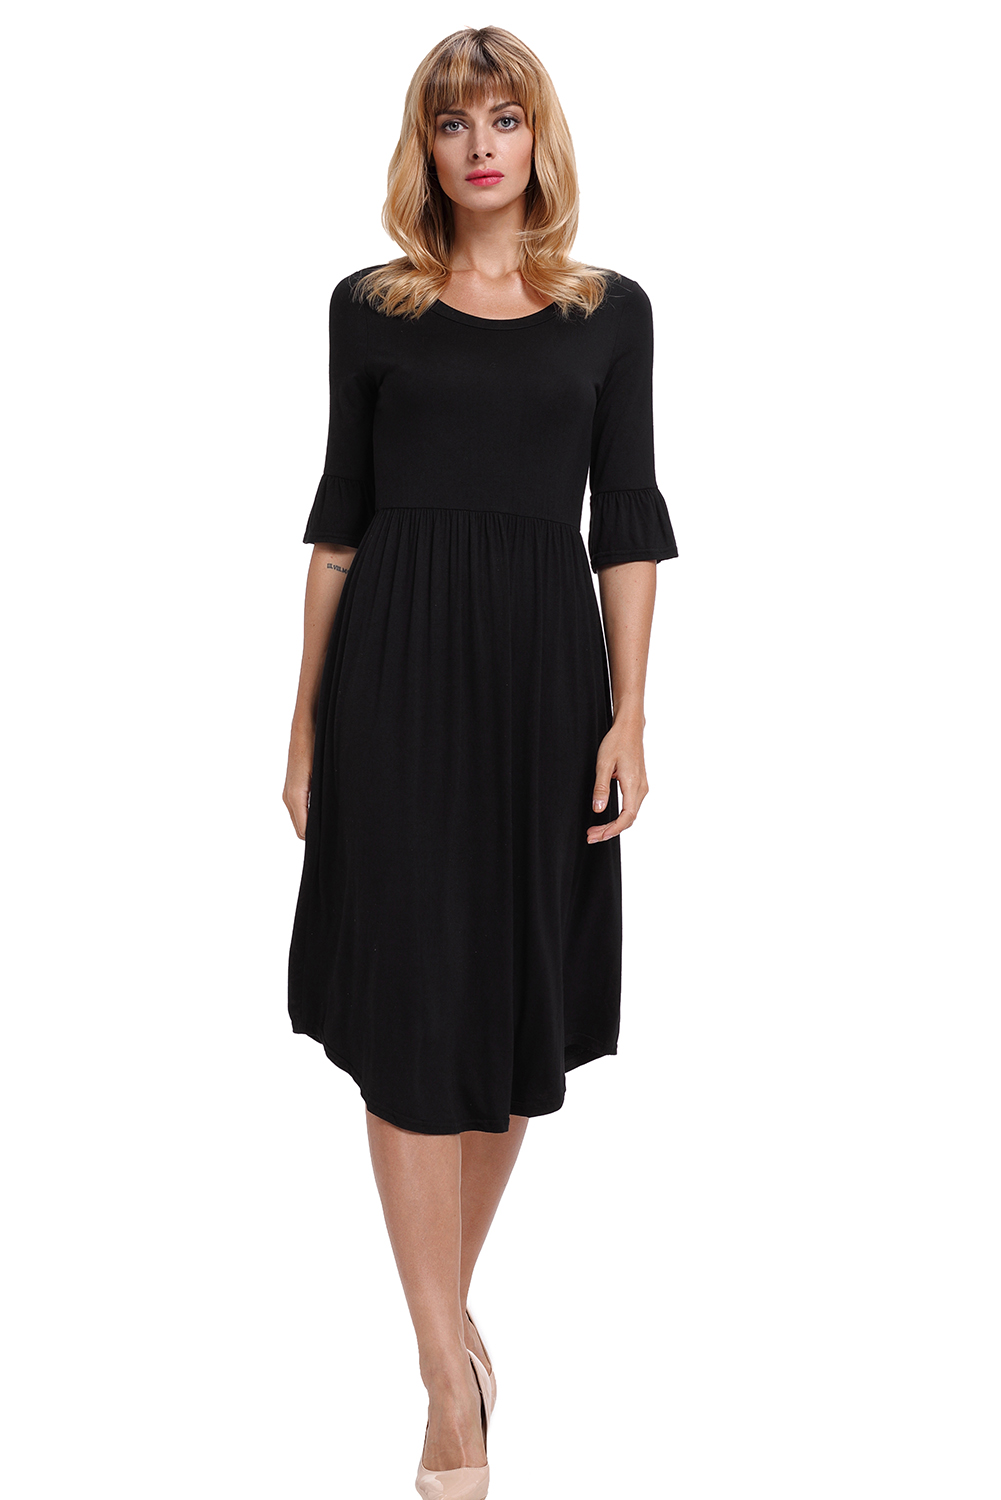 BY61652-2 Black Ruffle Sleeve Midi Jersey Dress